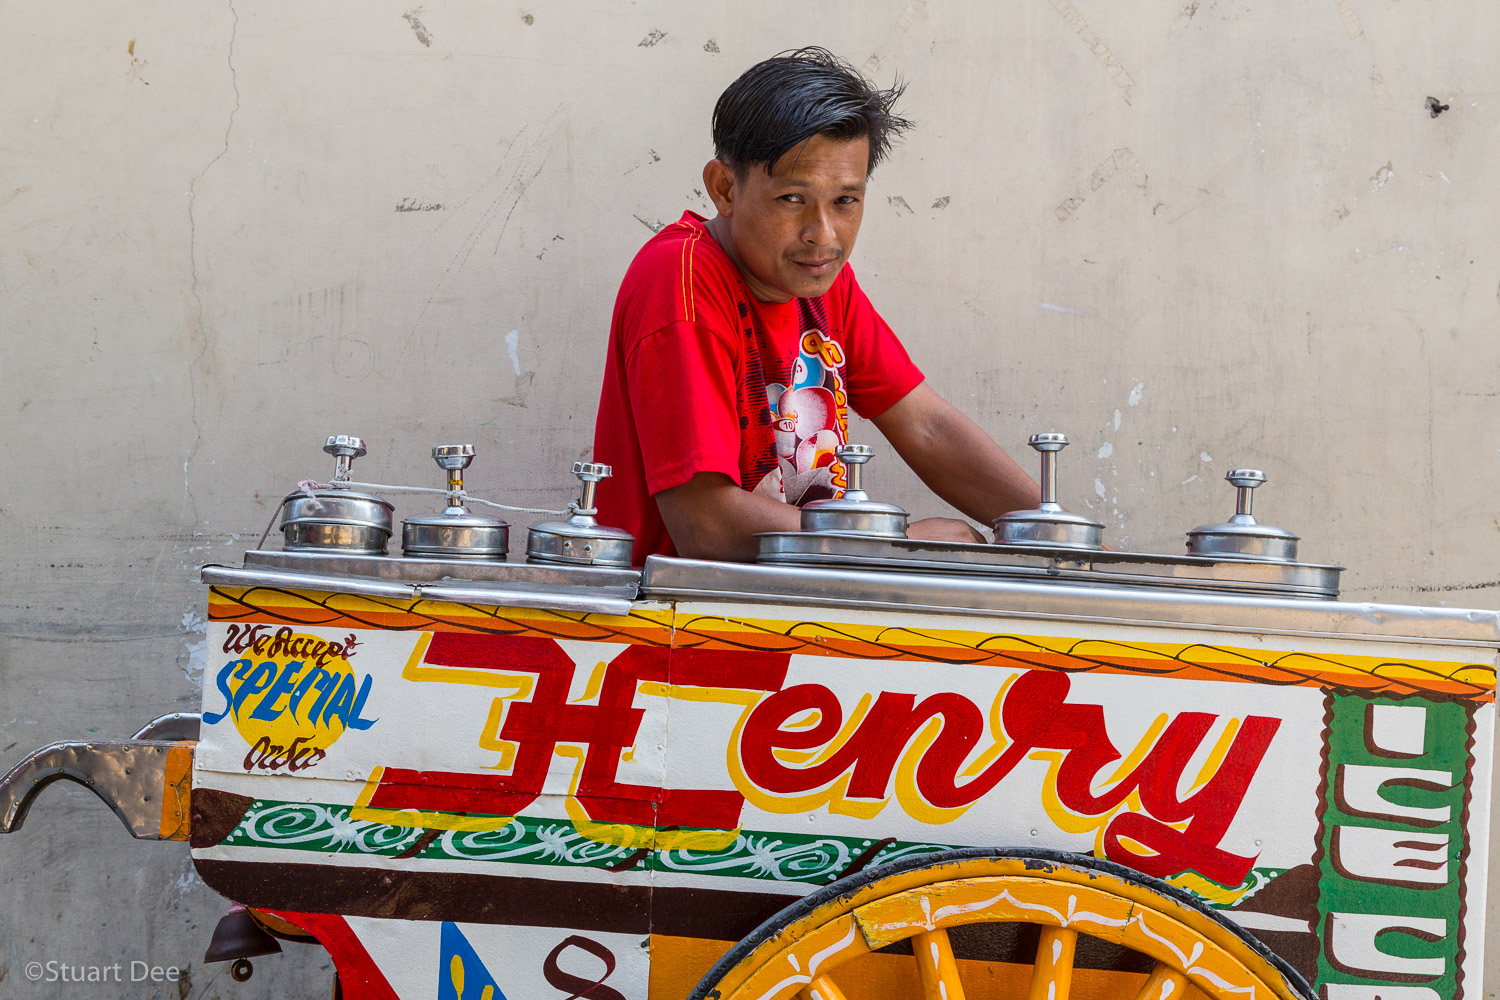  Ice cream vendor, or sorbetero, with traditional hand painted ice cream cart, Manila, Philippines 